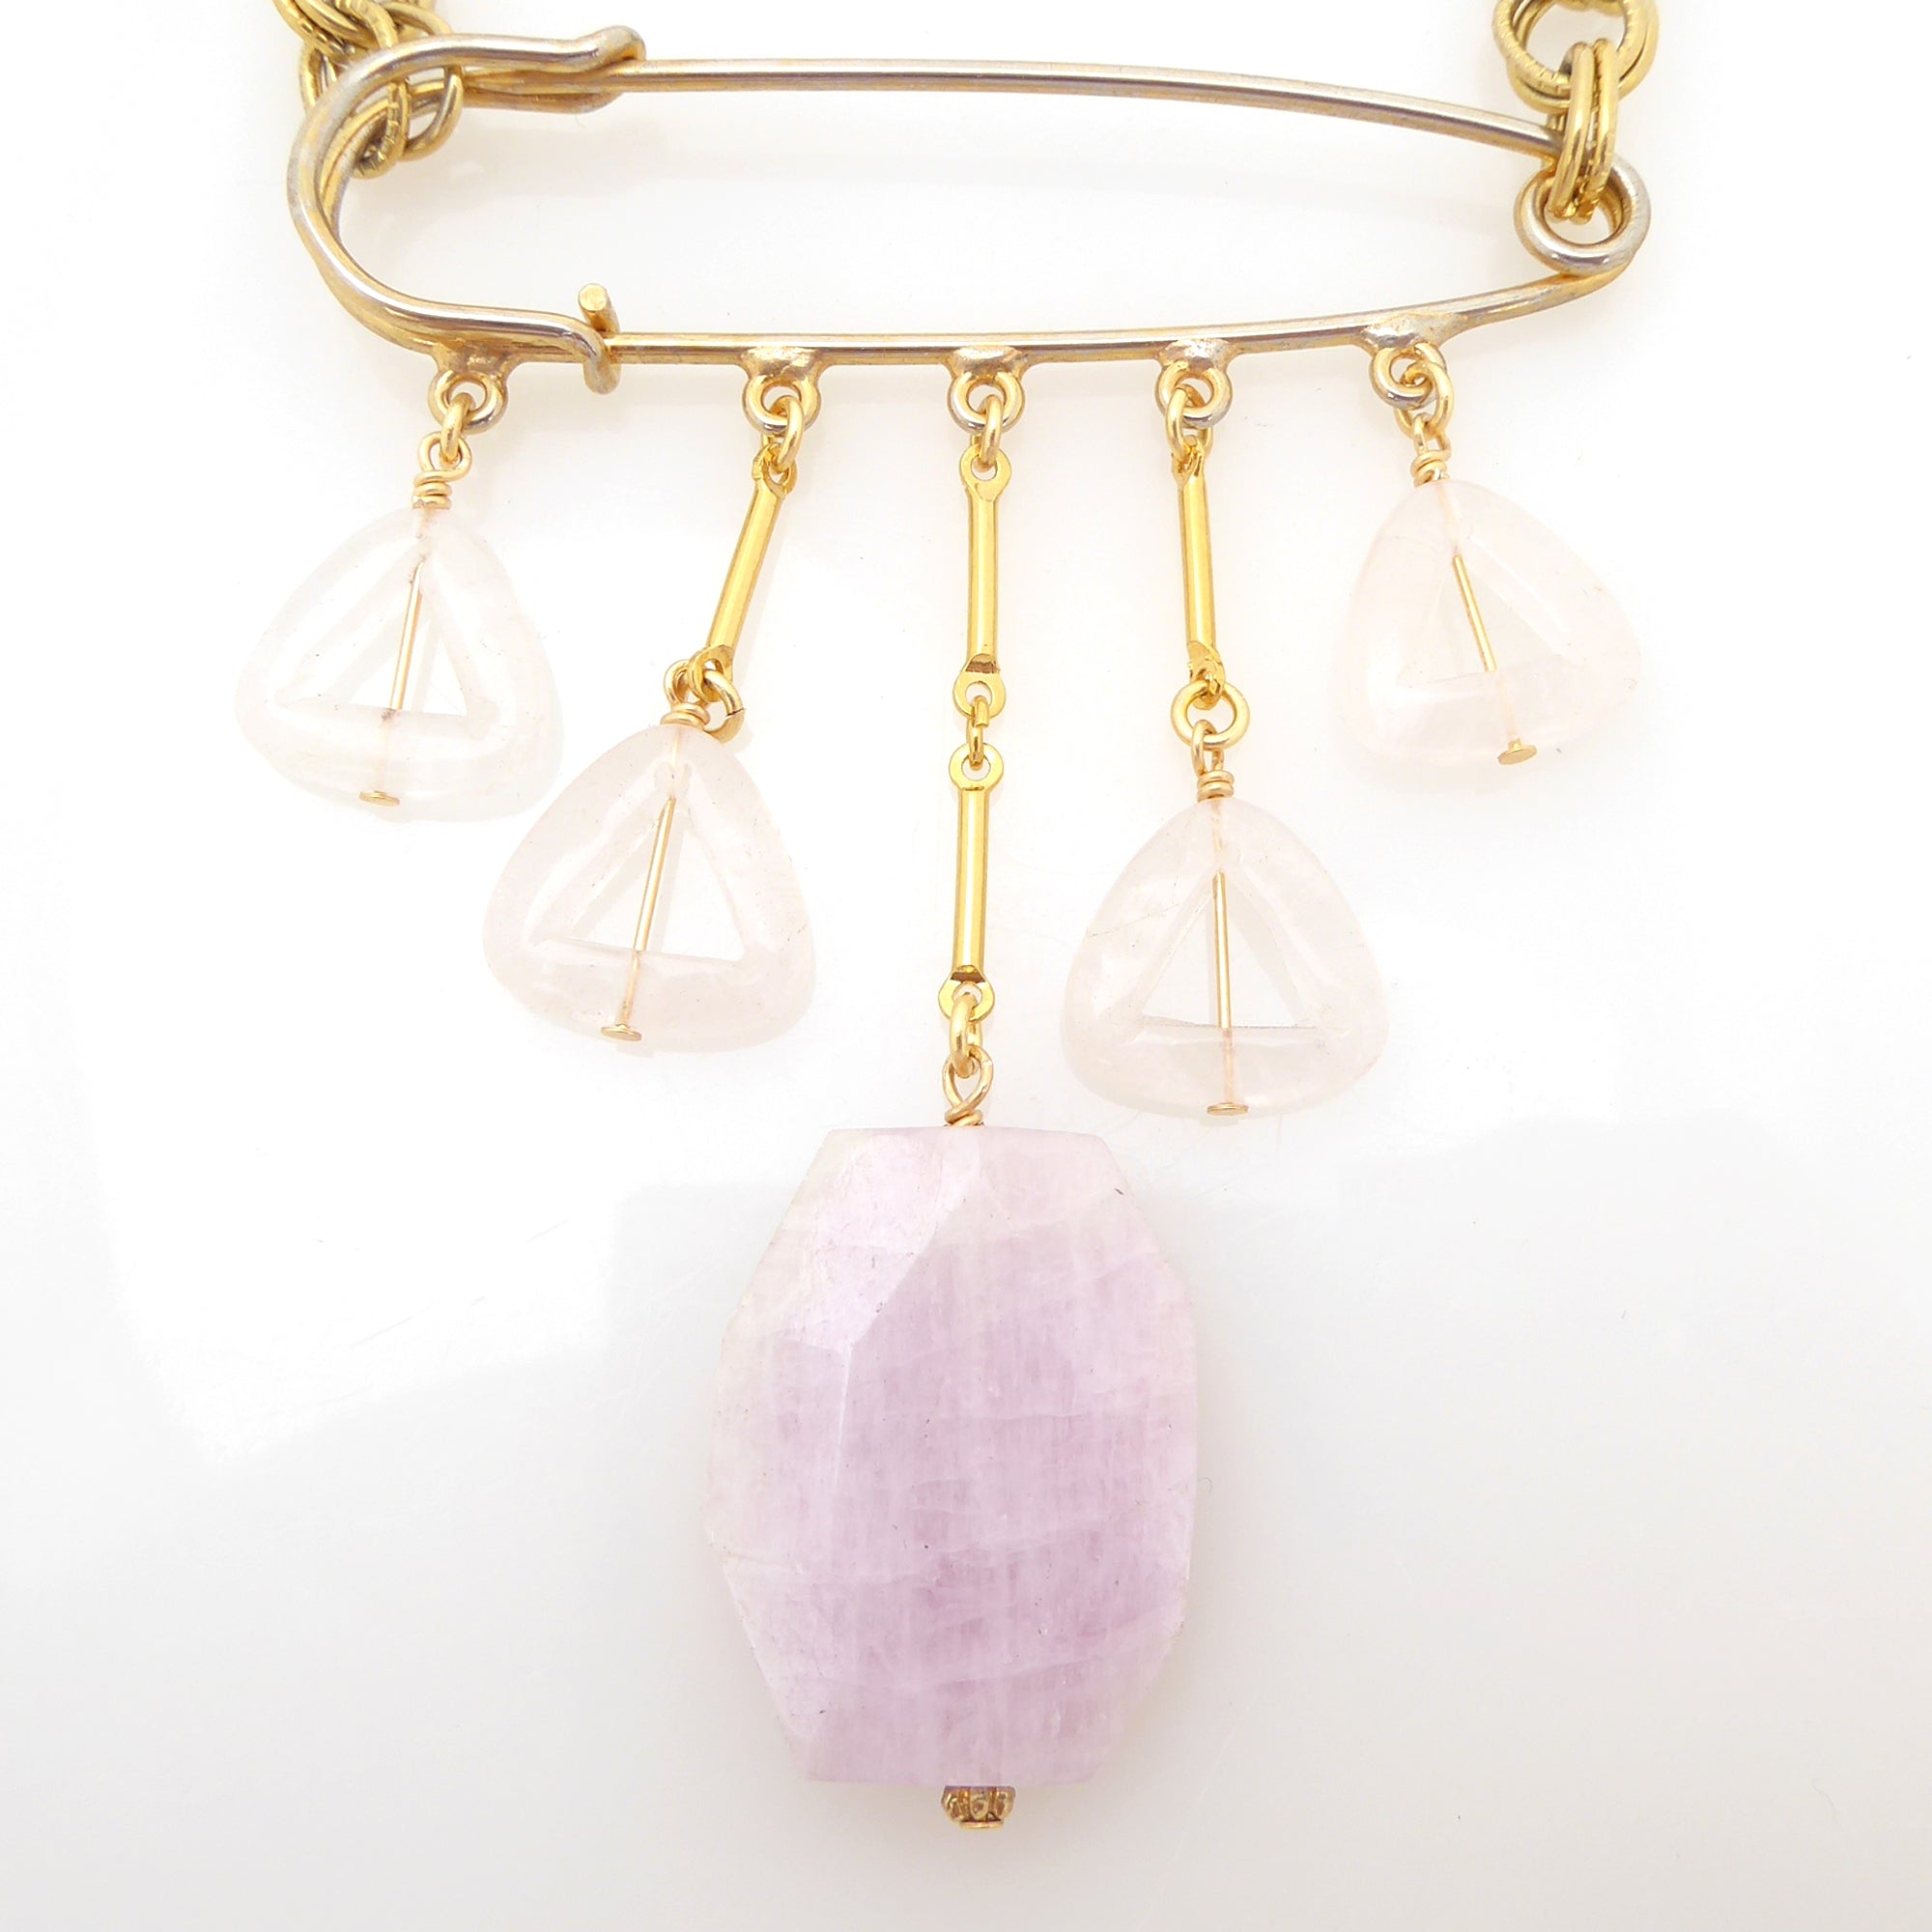 Kunzite and rose quartz safety pin necklace by Jenny Dayco 4